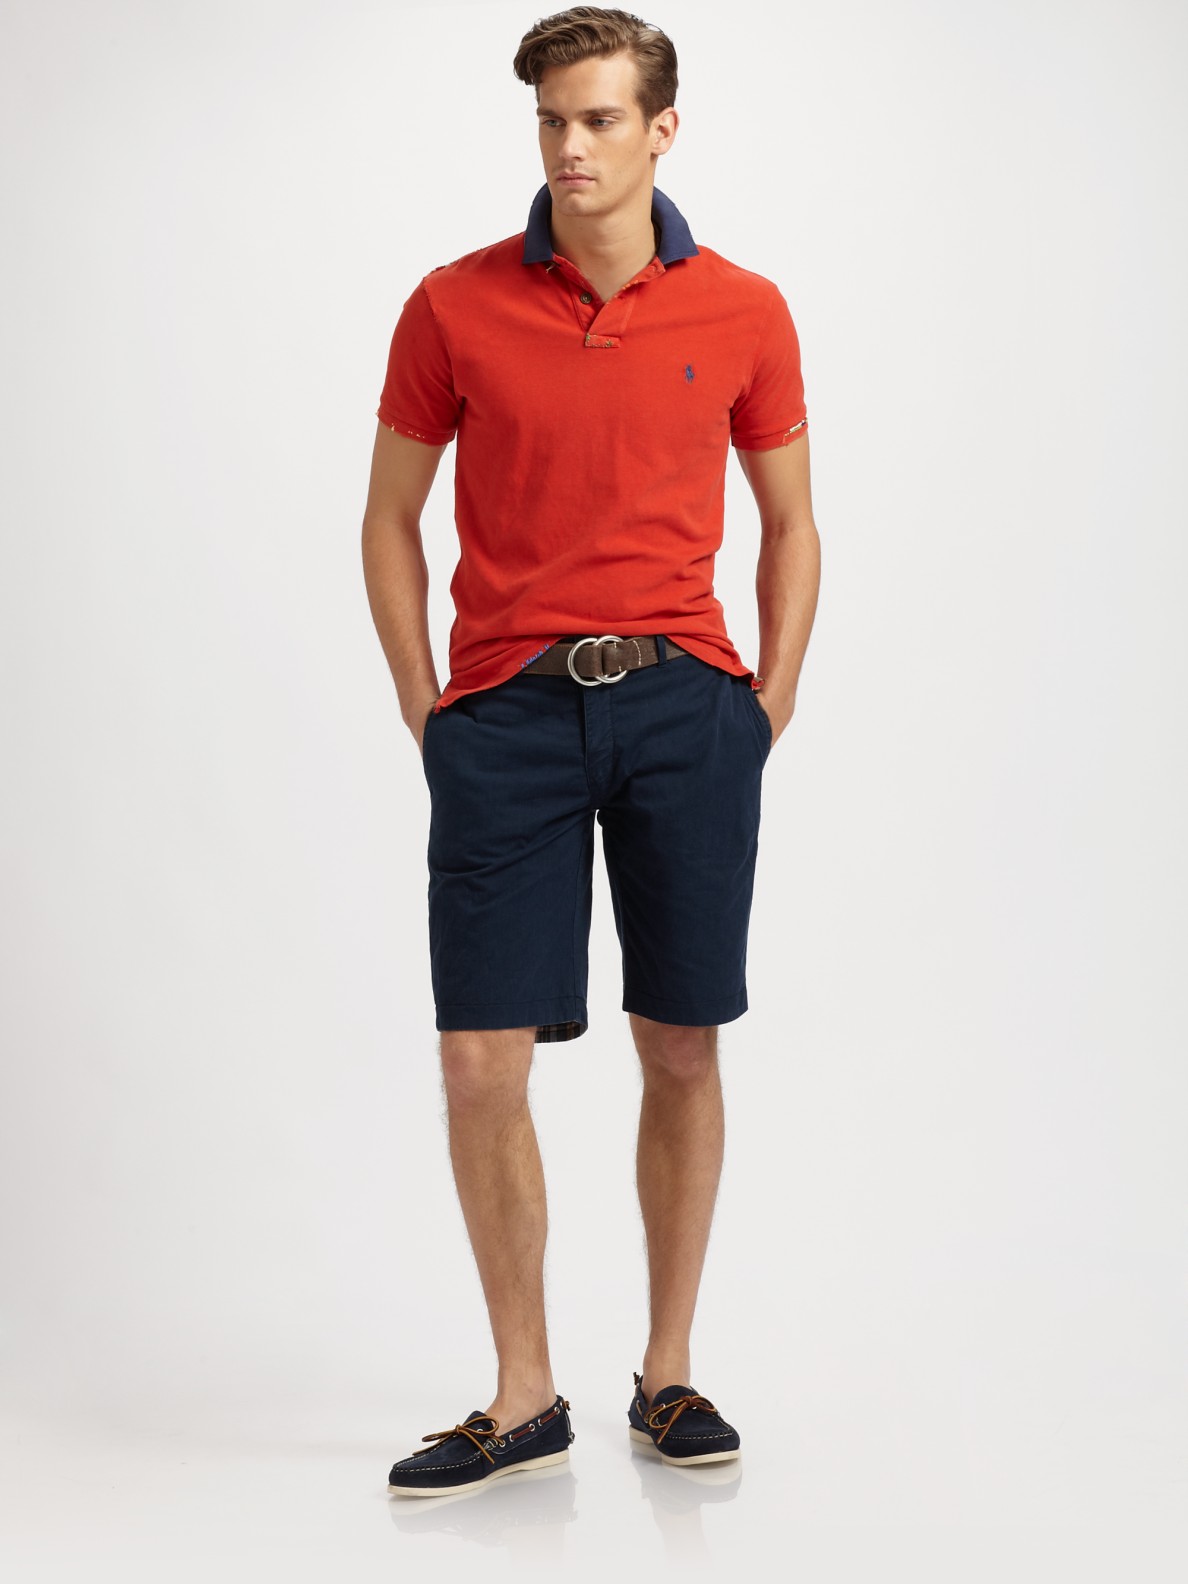 Lyst - Polo Ralph Lauren Reversible Lagos Shorts in Blue for Men